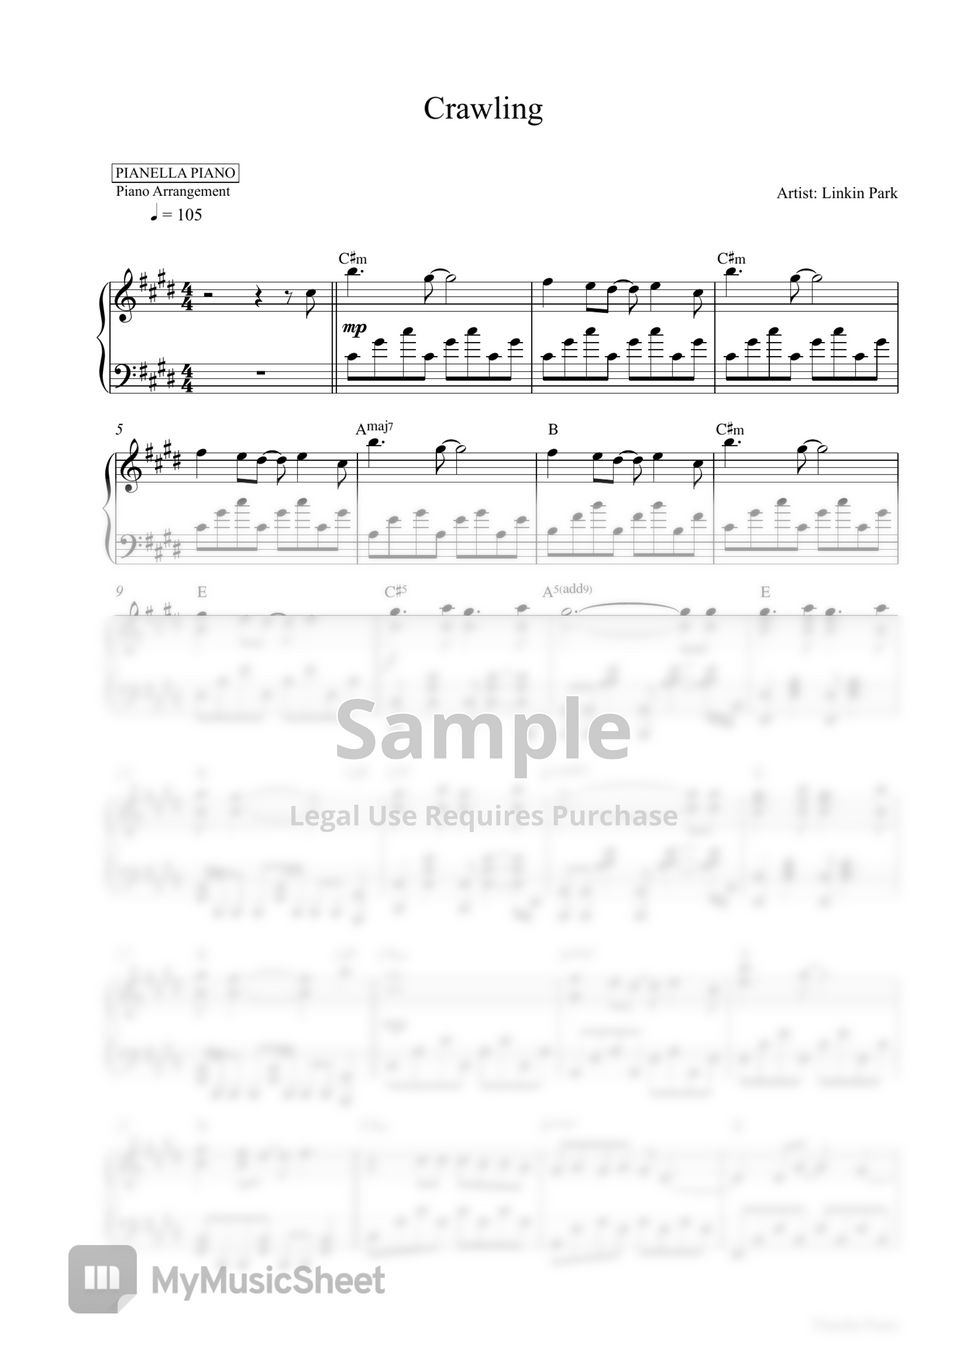 Linkin Park - Crawling (Piano Sheet) by Pianella Piano